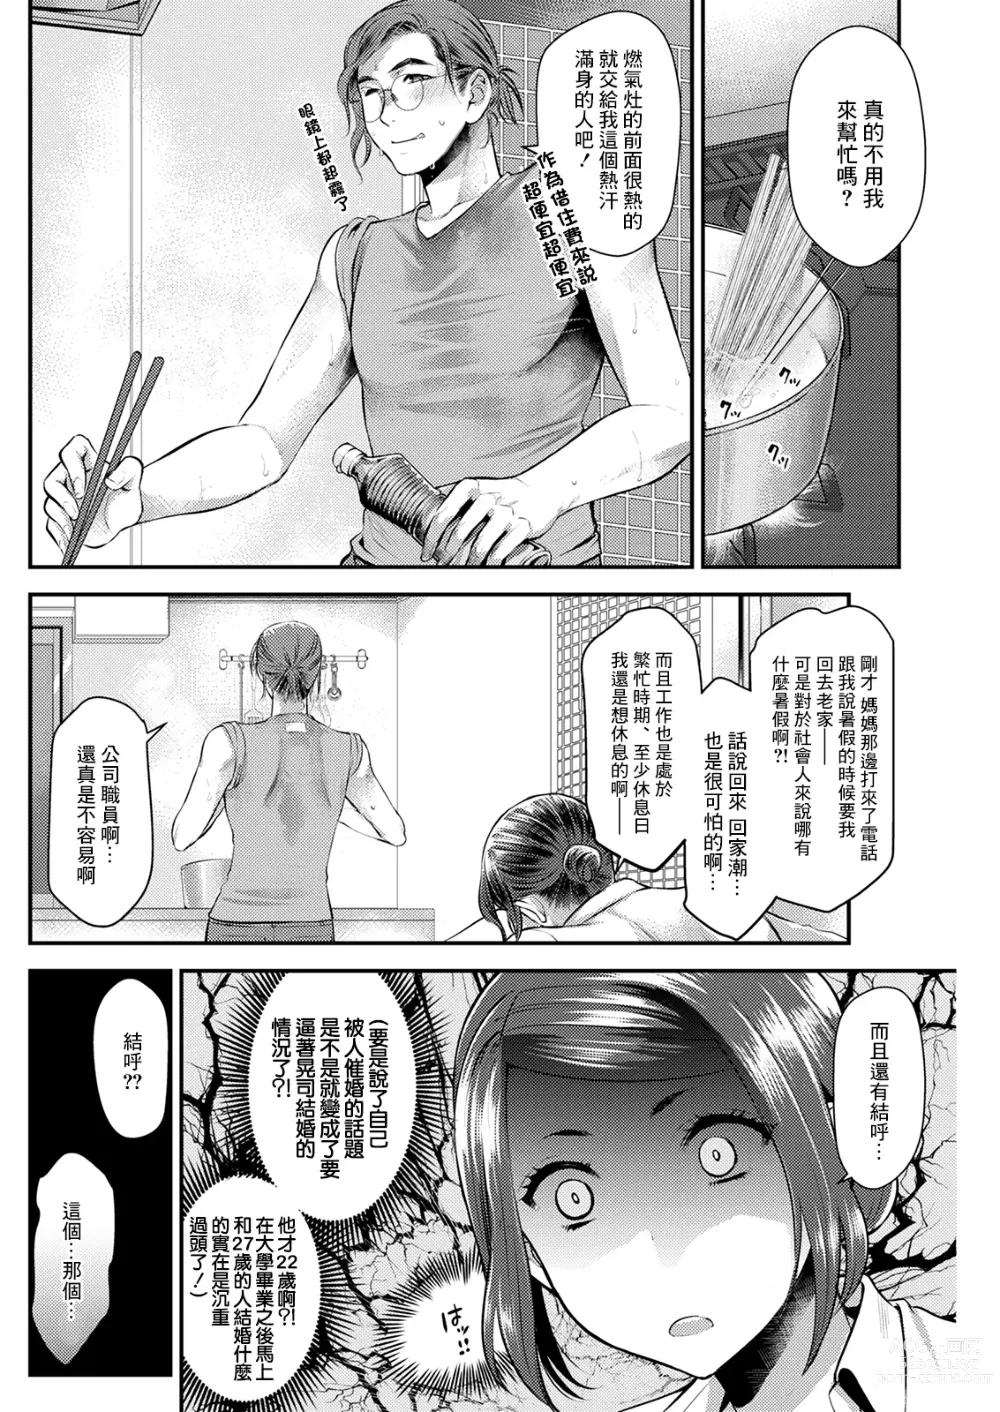 Page 4 of manga Sex x Meshi #4  Soumen  Champloo